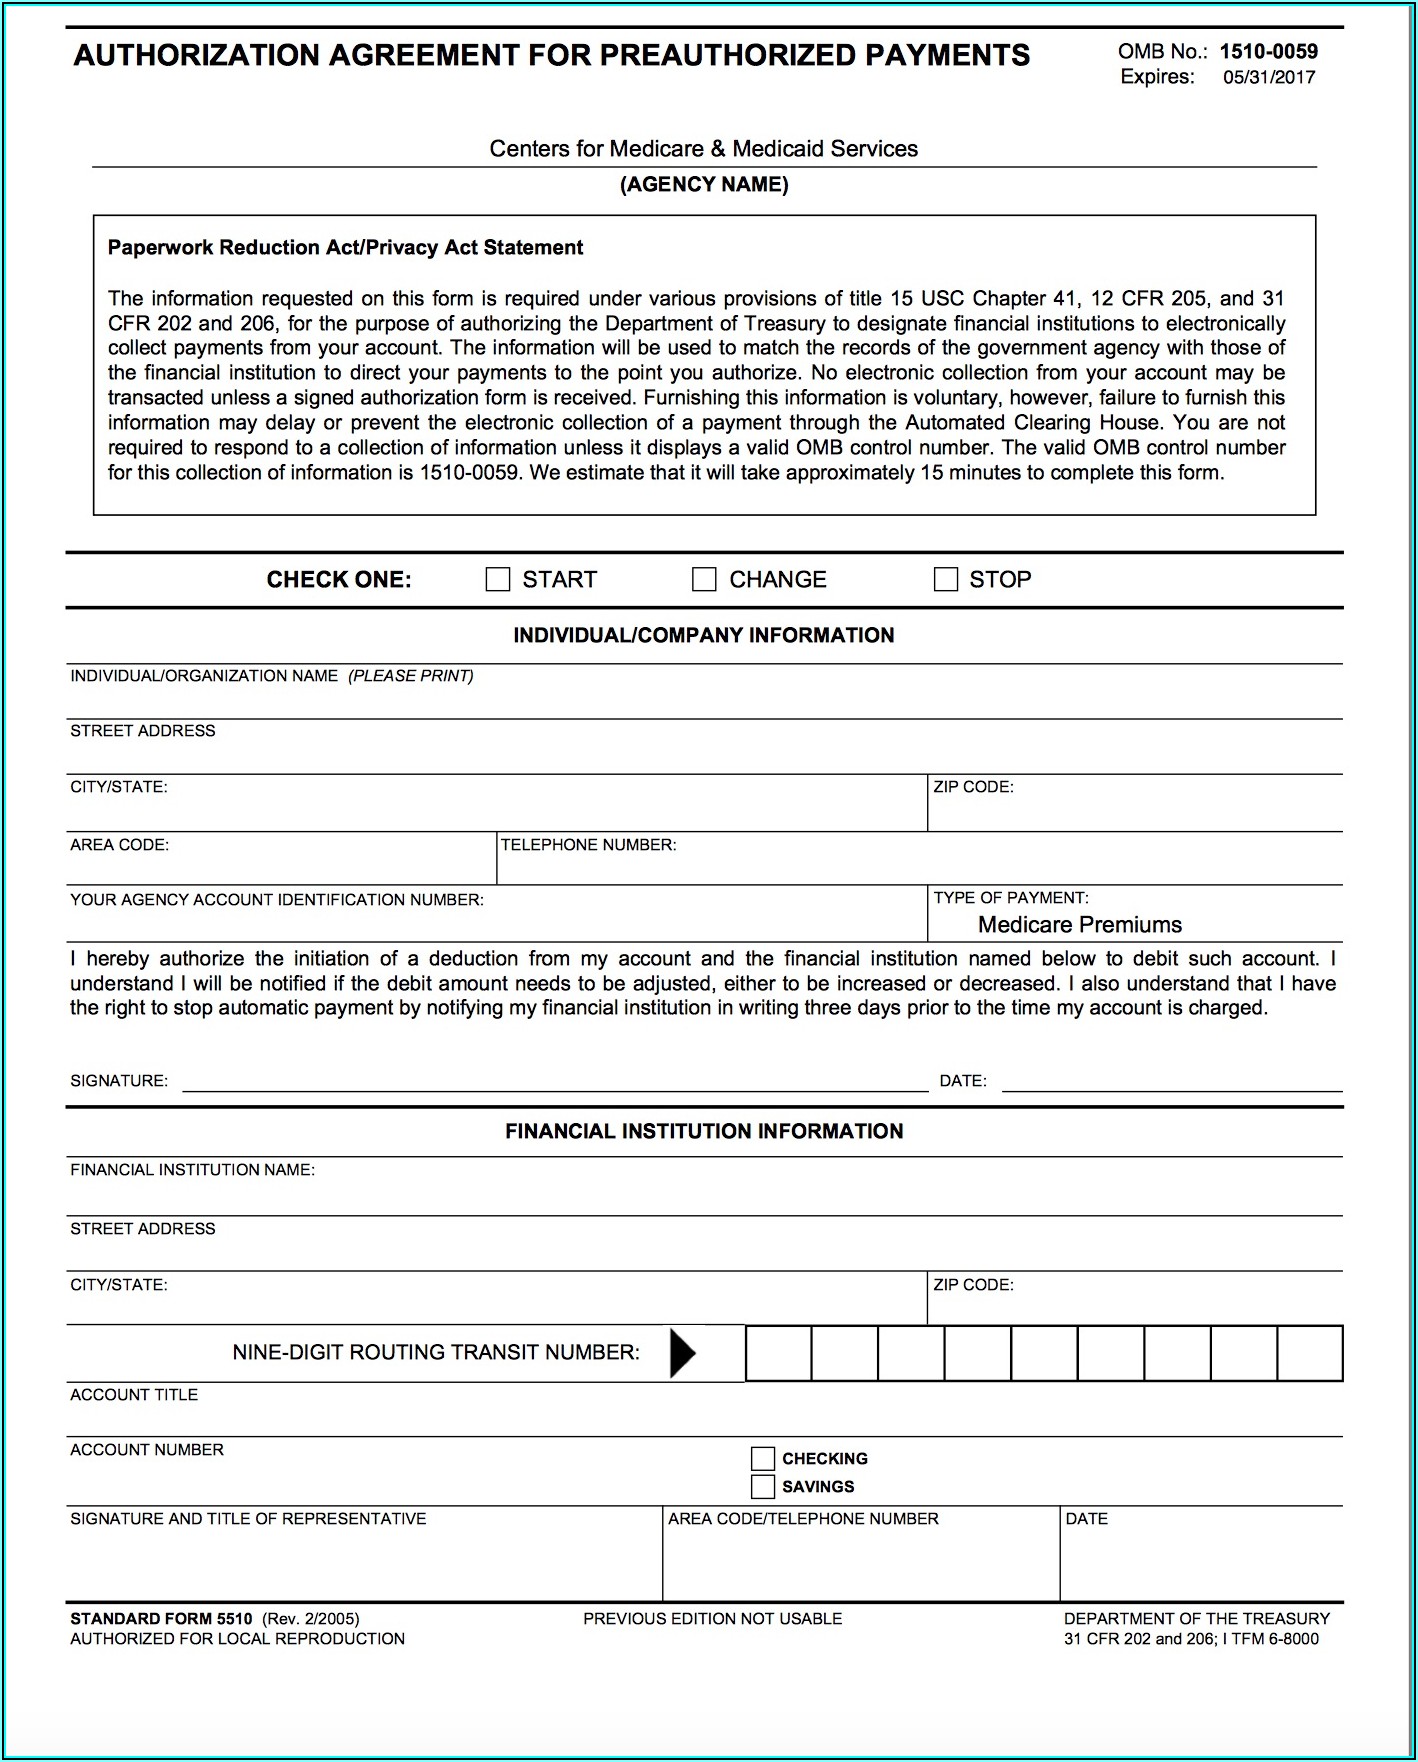 Medicare Form 5510 Signature And Title Of Representative